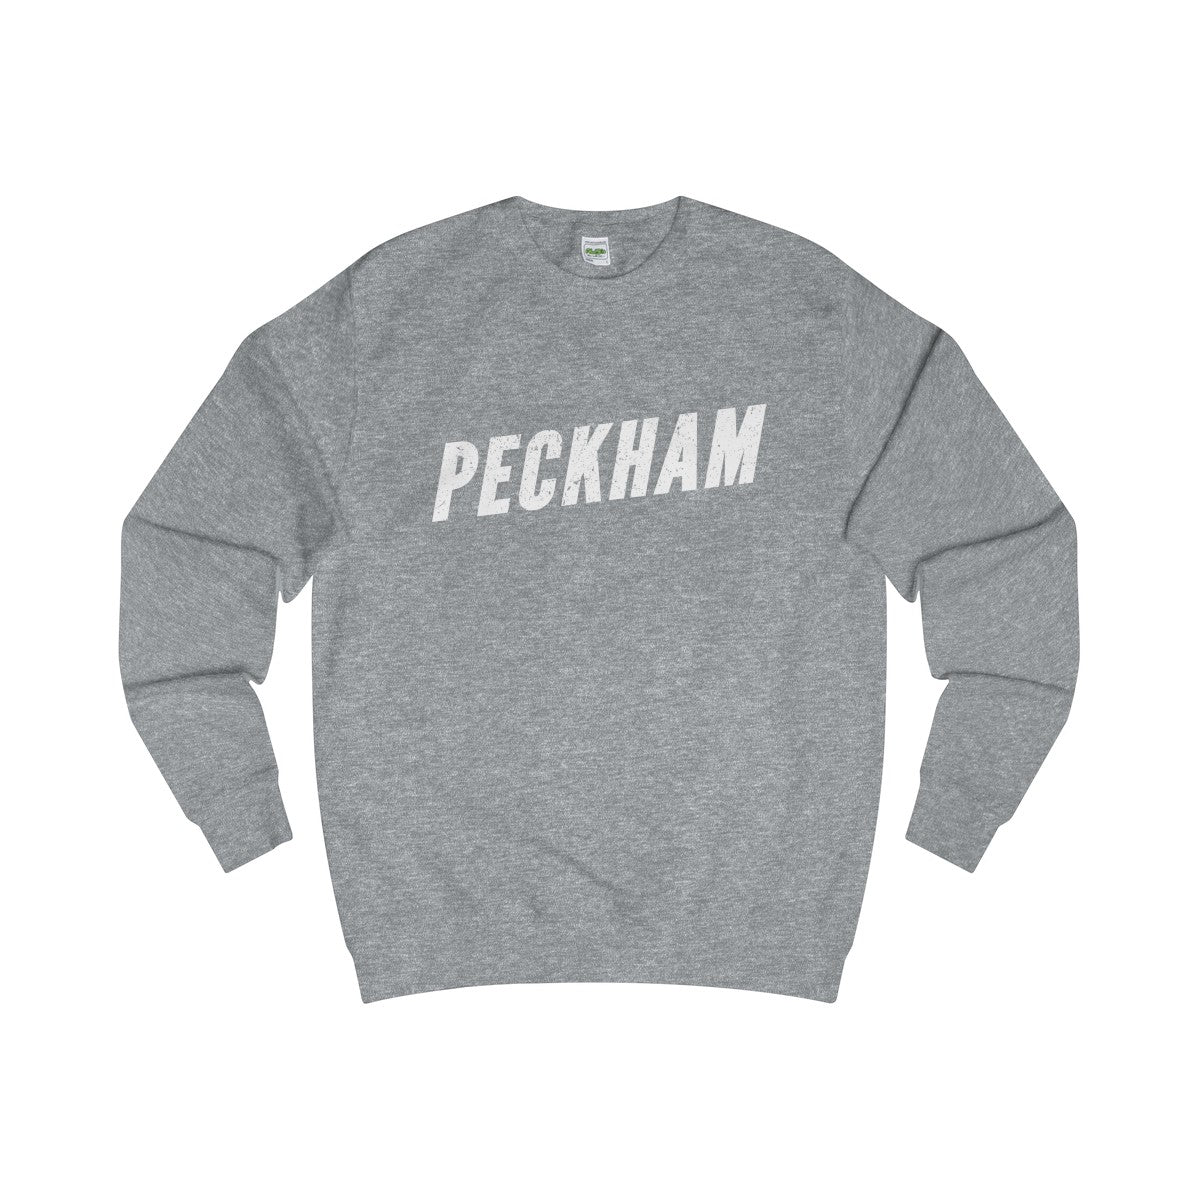 Peckham Sweater